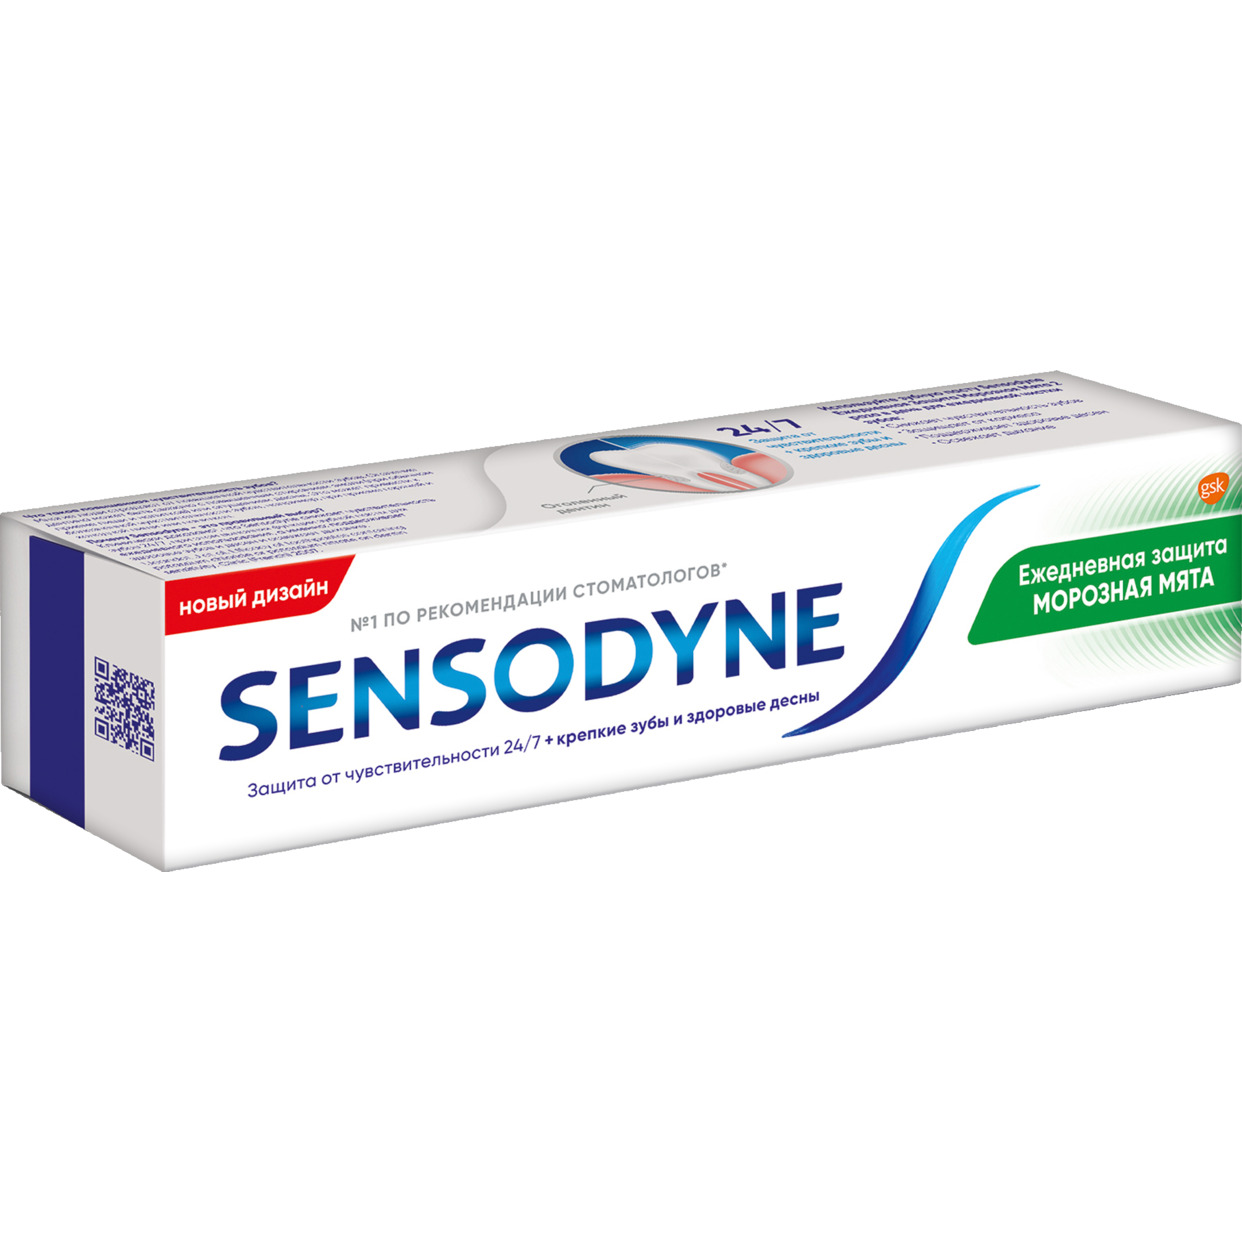 Sensodyne Ежедневная Защита Морозная Мята, зубная паста 65 г